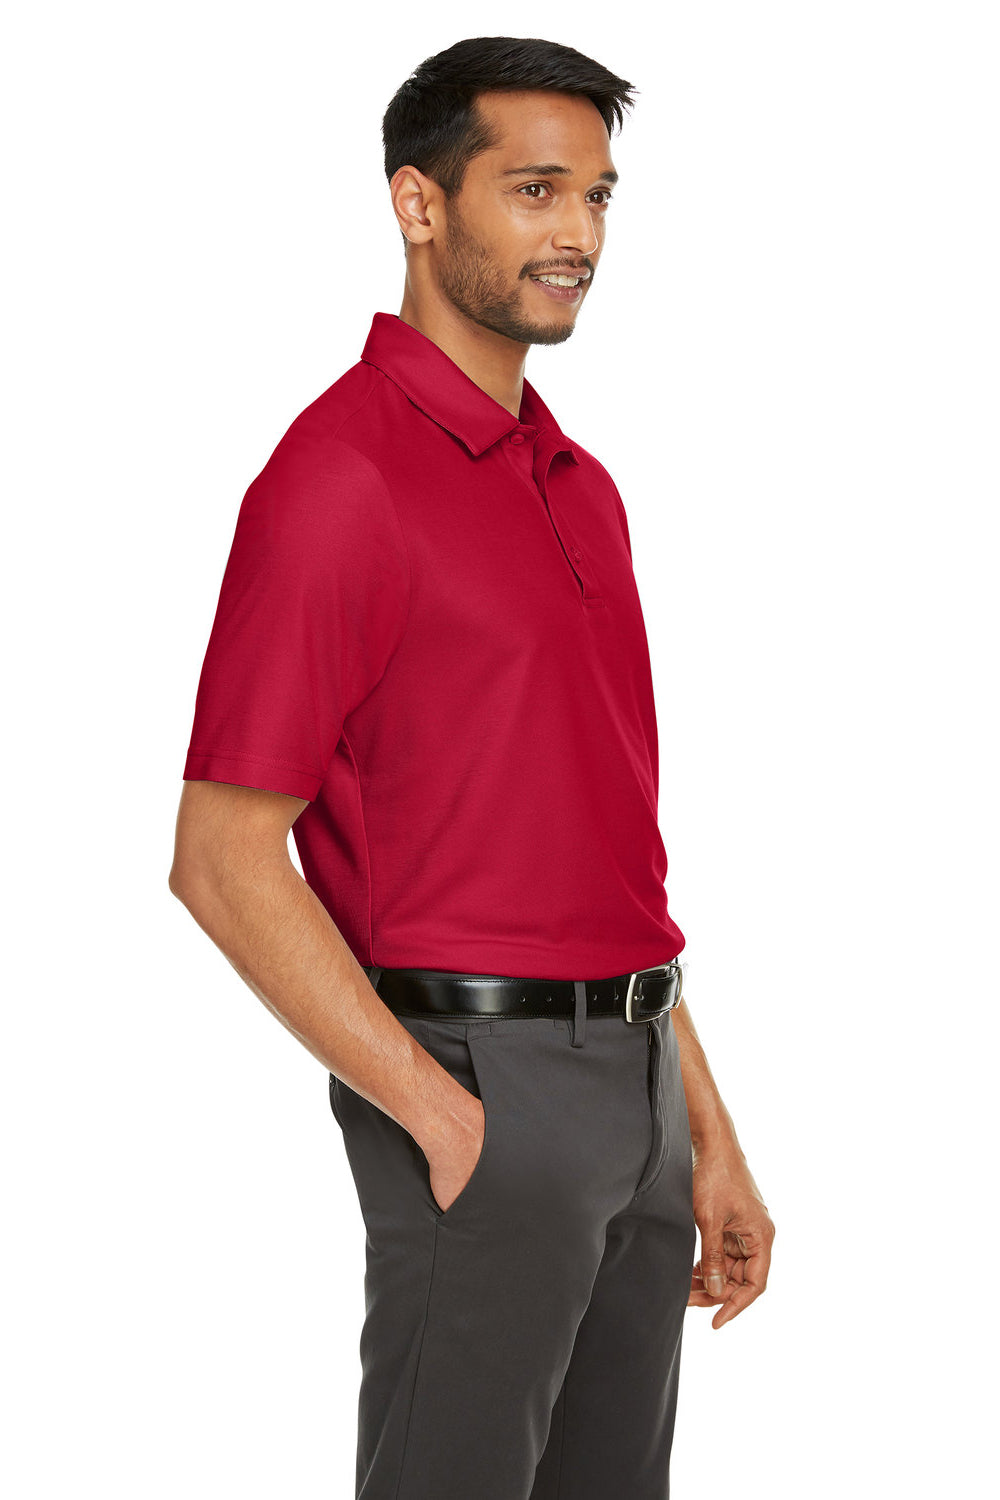 Core 365 CE112 Mens Fusion ChromaSoft Performance Moisture Wicking Short Sleeve Polo Shirt Classic Red 3Q